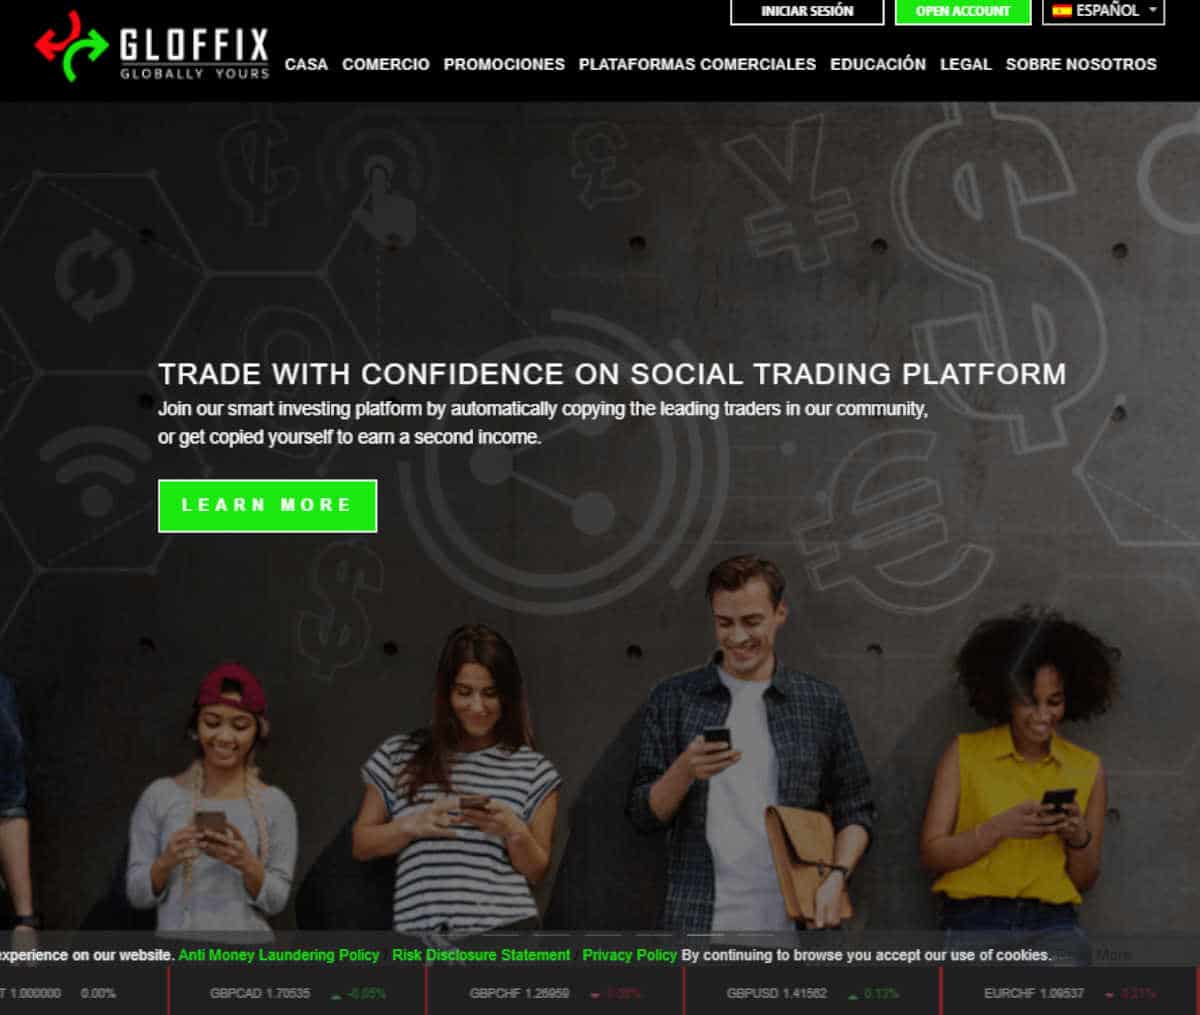 Página web de Gloffix